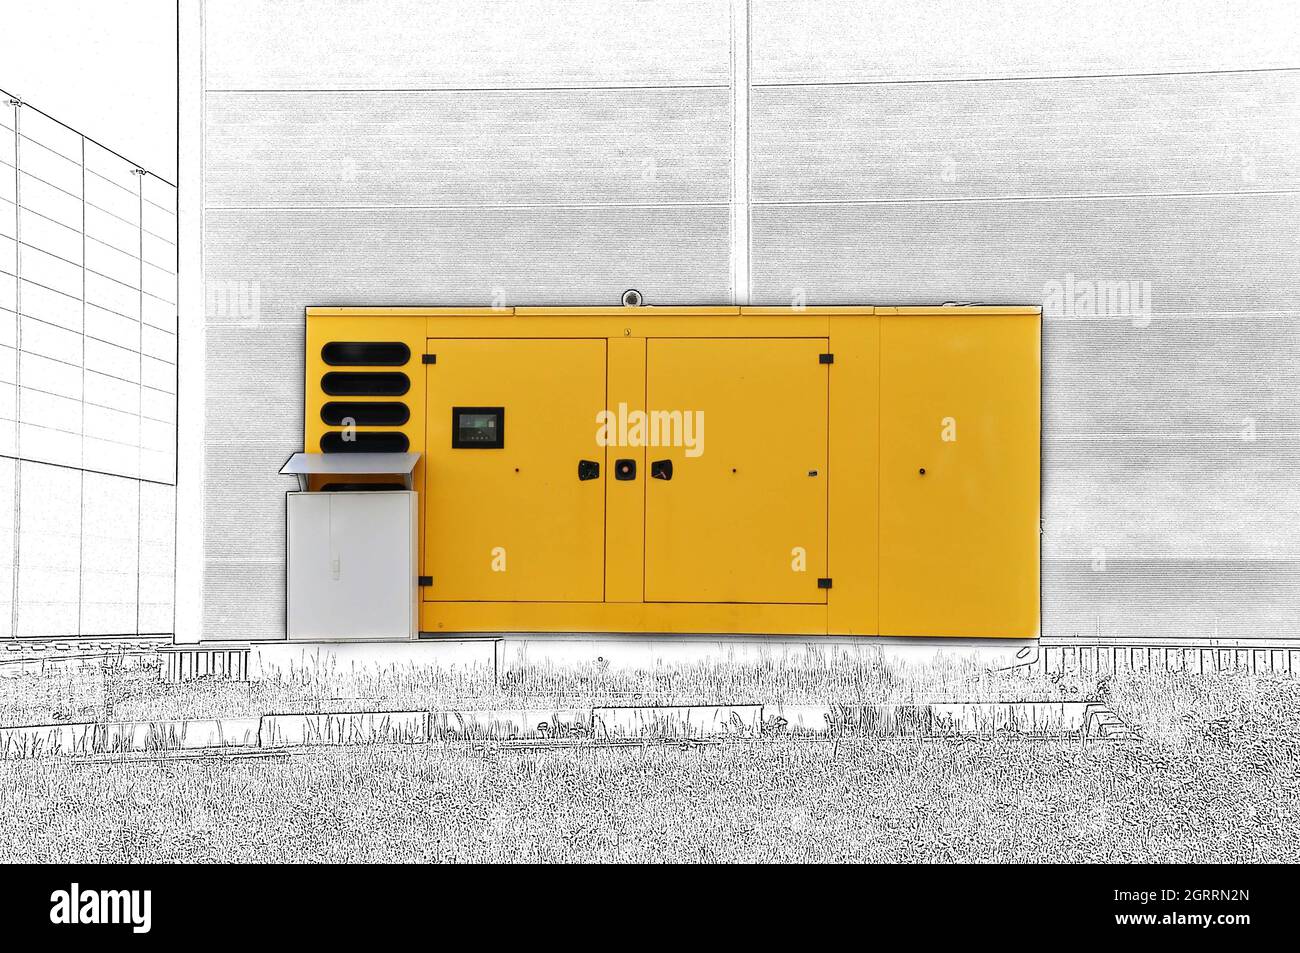 Mobiler Dieselgenerator für Notstromversorgung. Skizze Stockfotografie -  Alamy